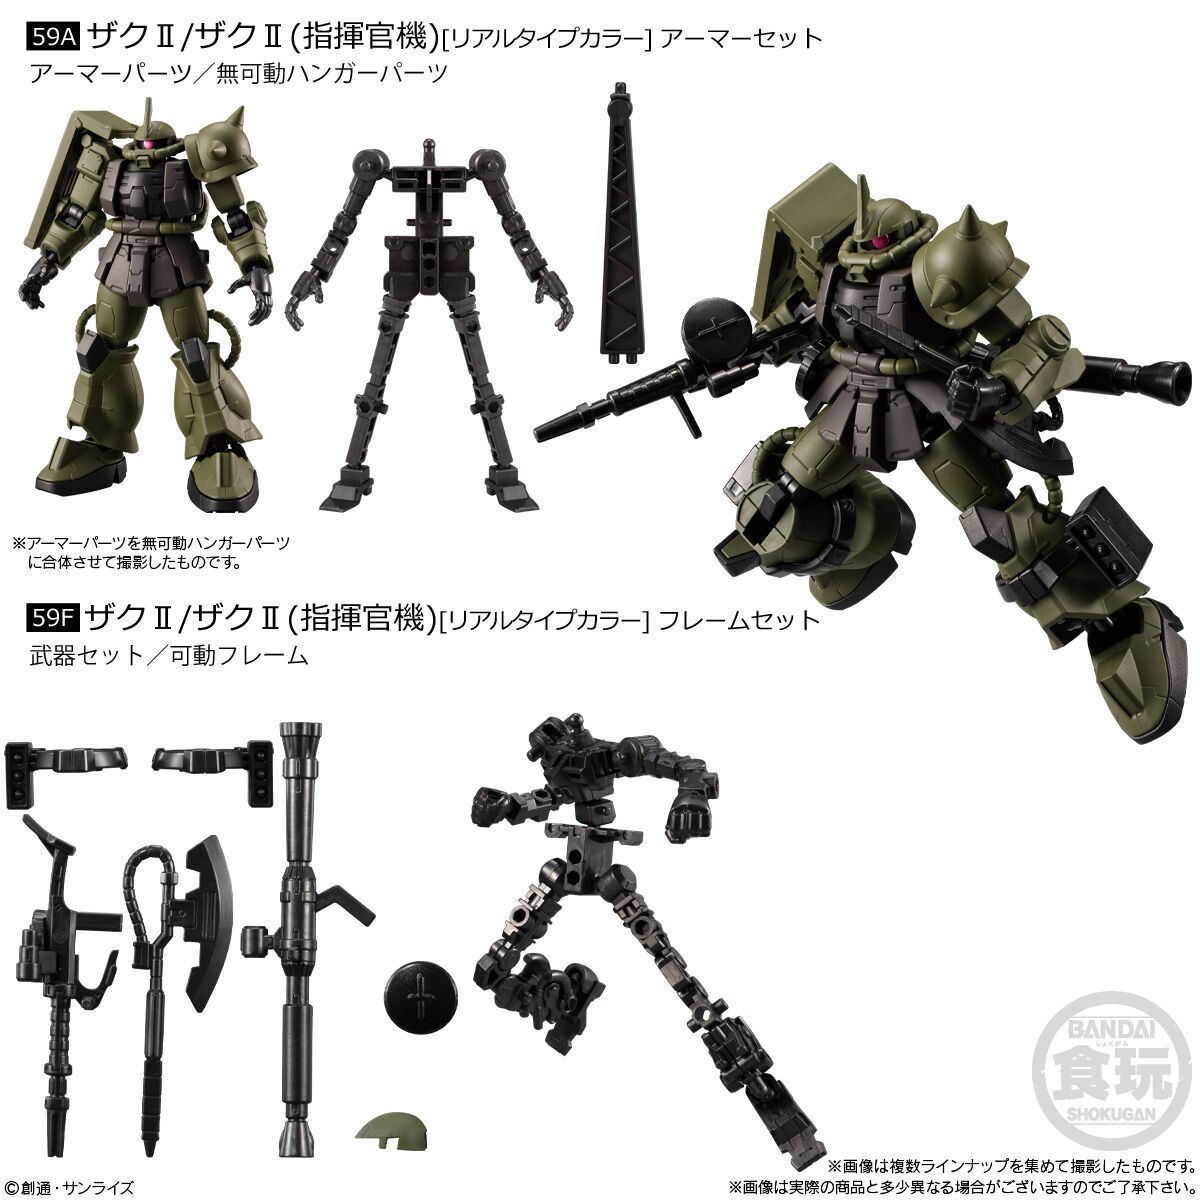  Mobile Suit Gundam G-Frame Fa Real Type Combo Mô Hình BANDAI CANDY CB-A2657063-4778 